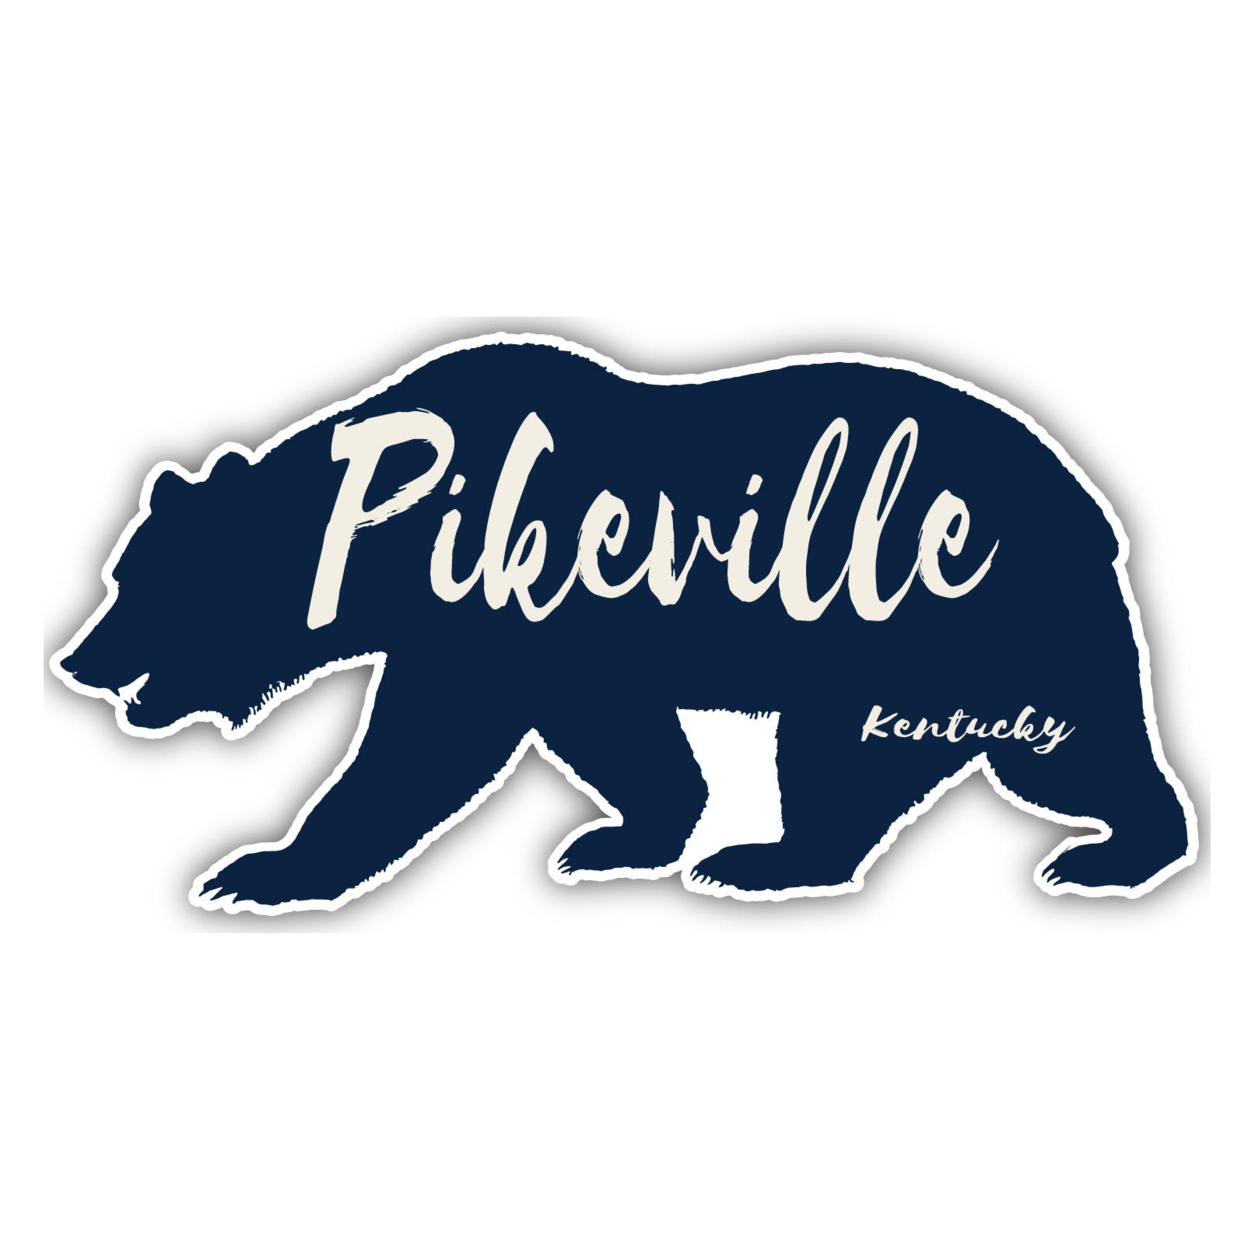 Pikeville Kentucky Souvenir Decorative Stickers (Choose Theme And Size) - Single Unit, 4-Inch, Bear